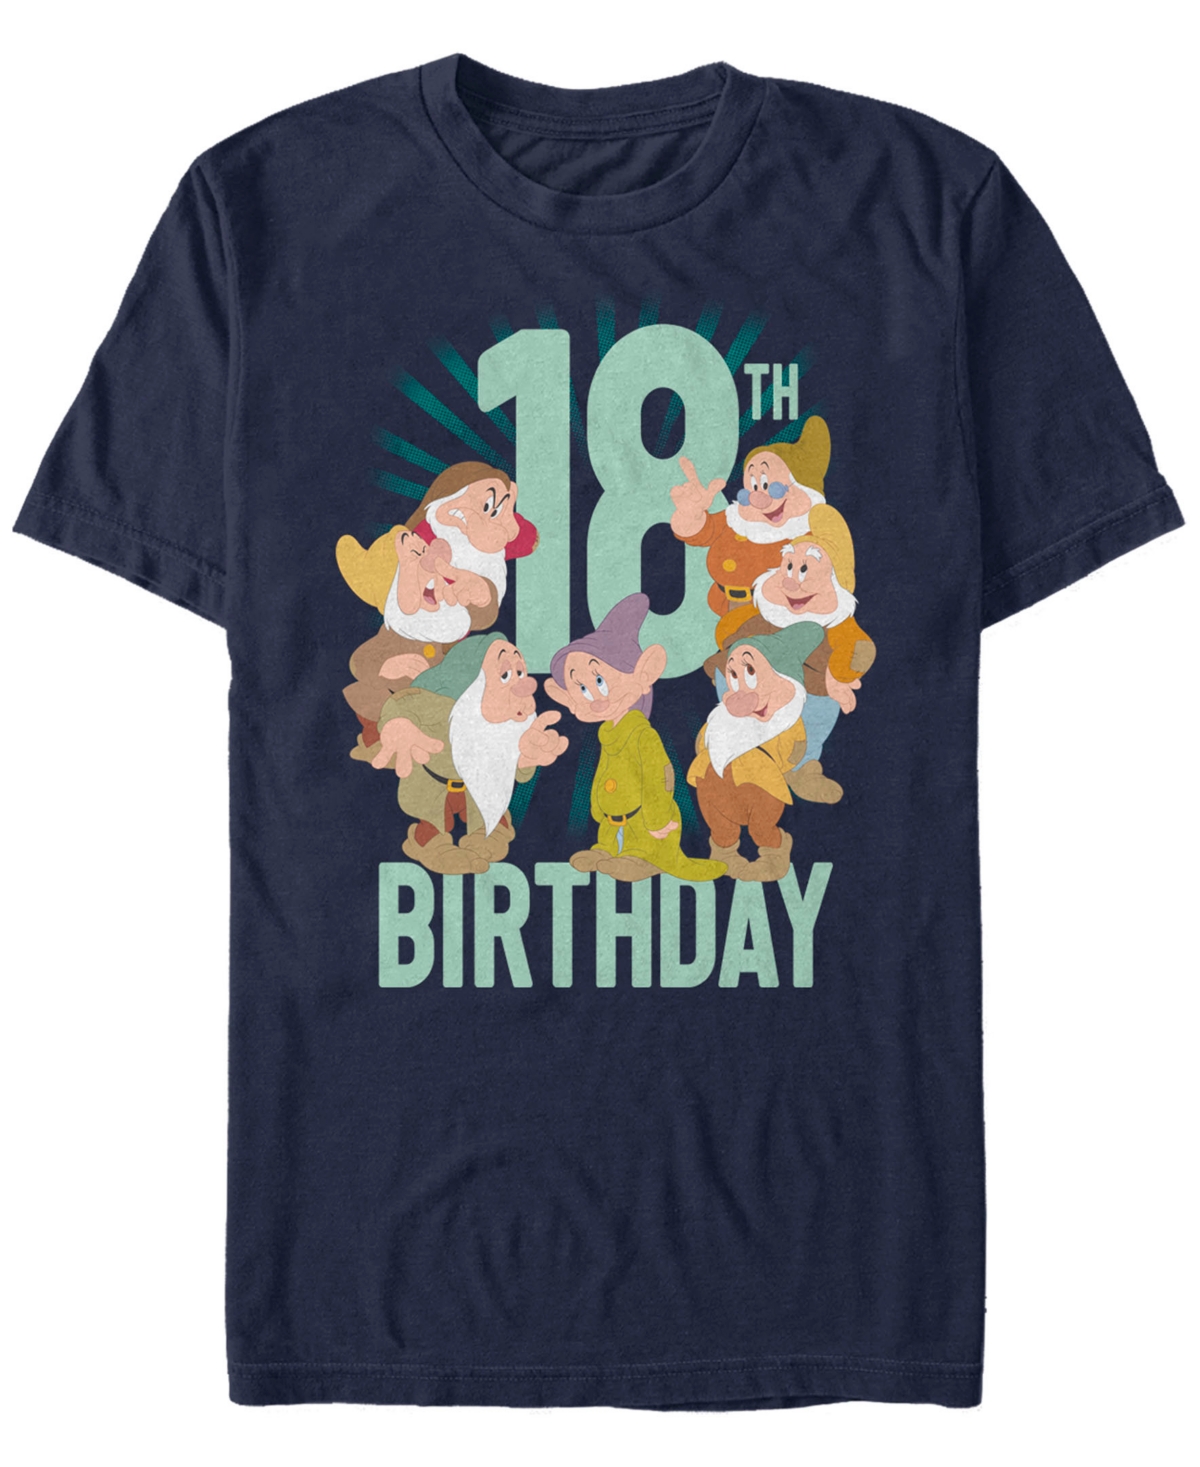 Men's Dwarves 18 Birthday Short Sleeve Crew T-shirt - Navy